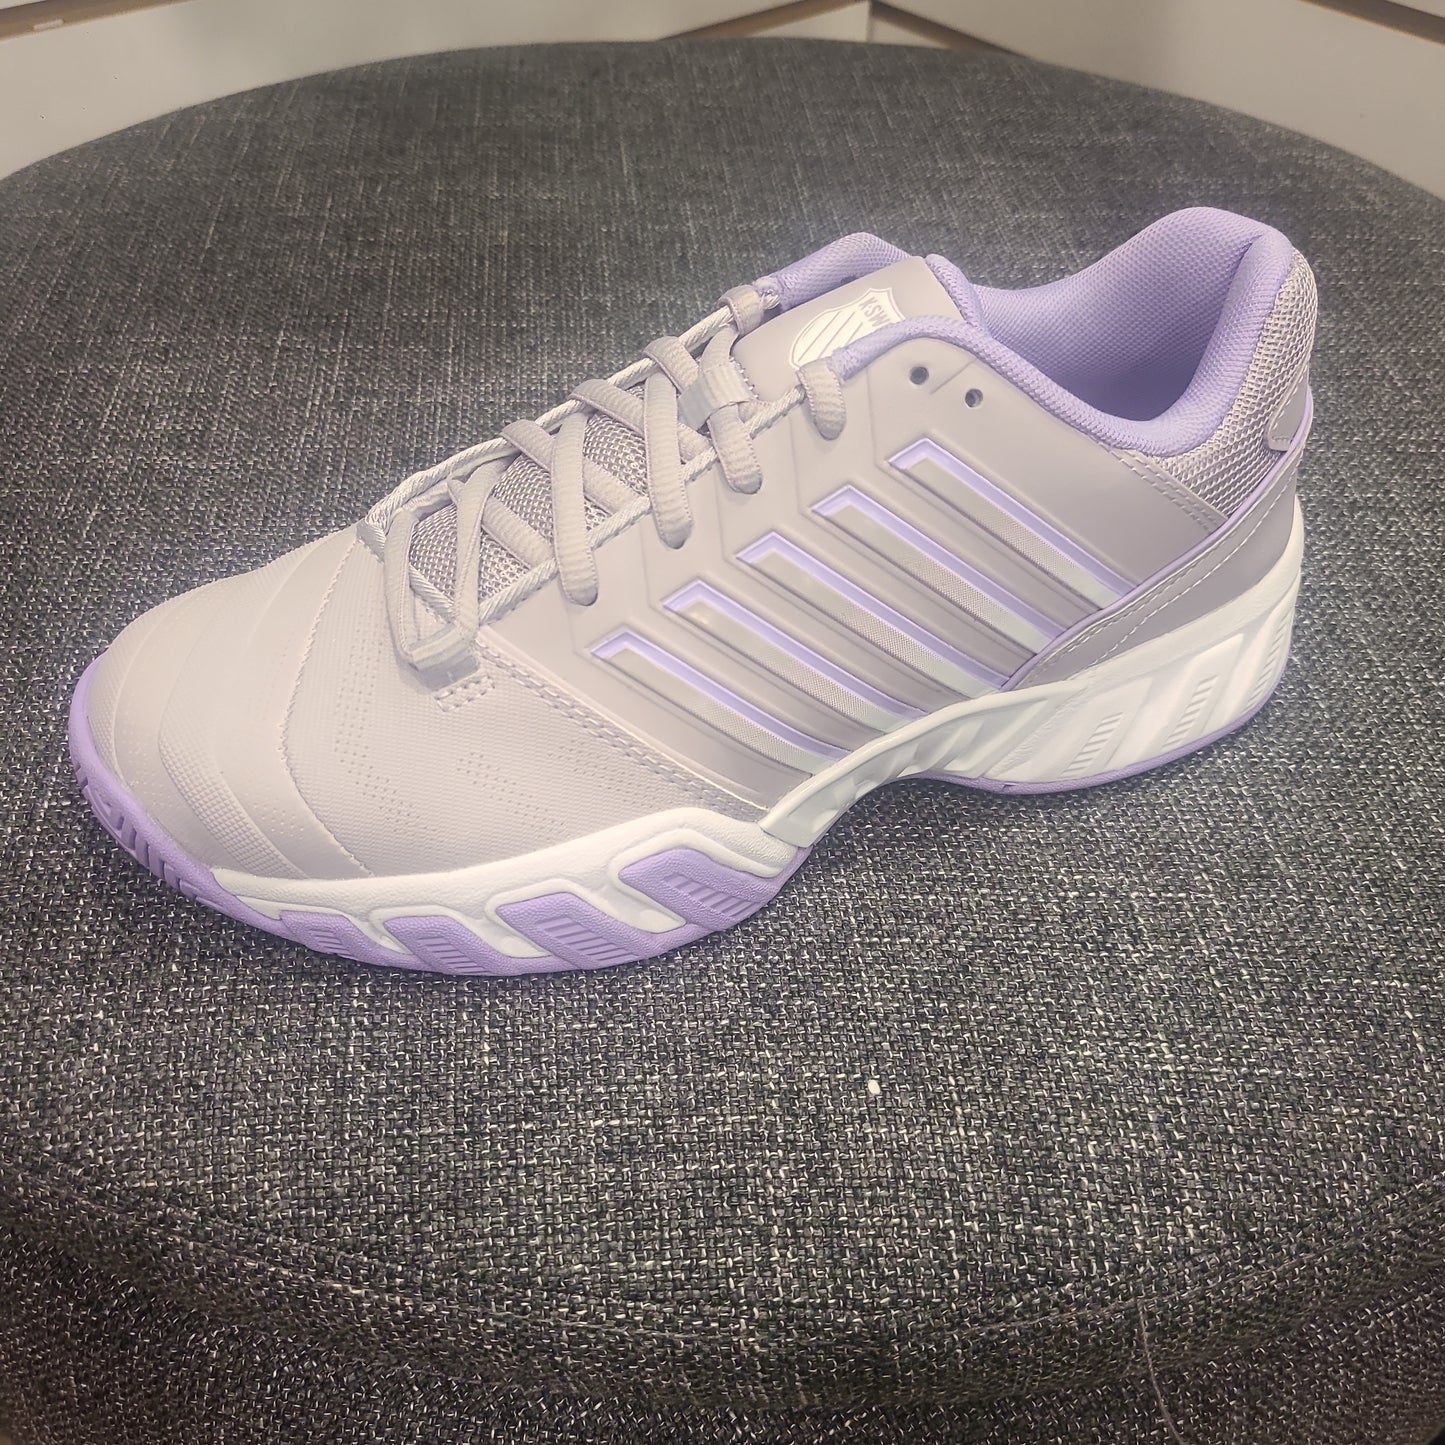 K SWISS Big Shot Light 4 Tennis Shoe (Women's) - Rain/ White/Purple